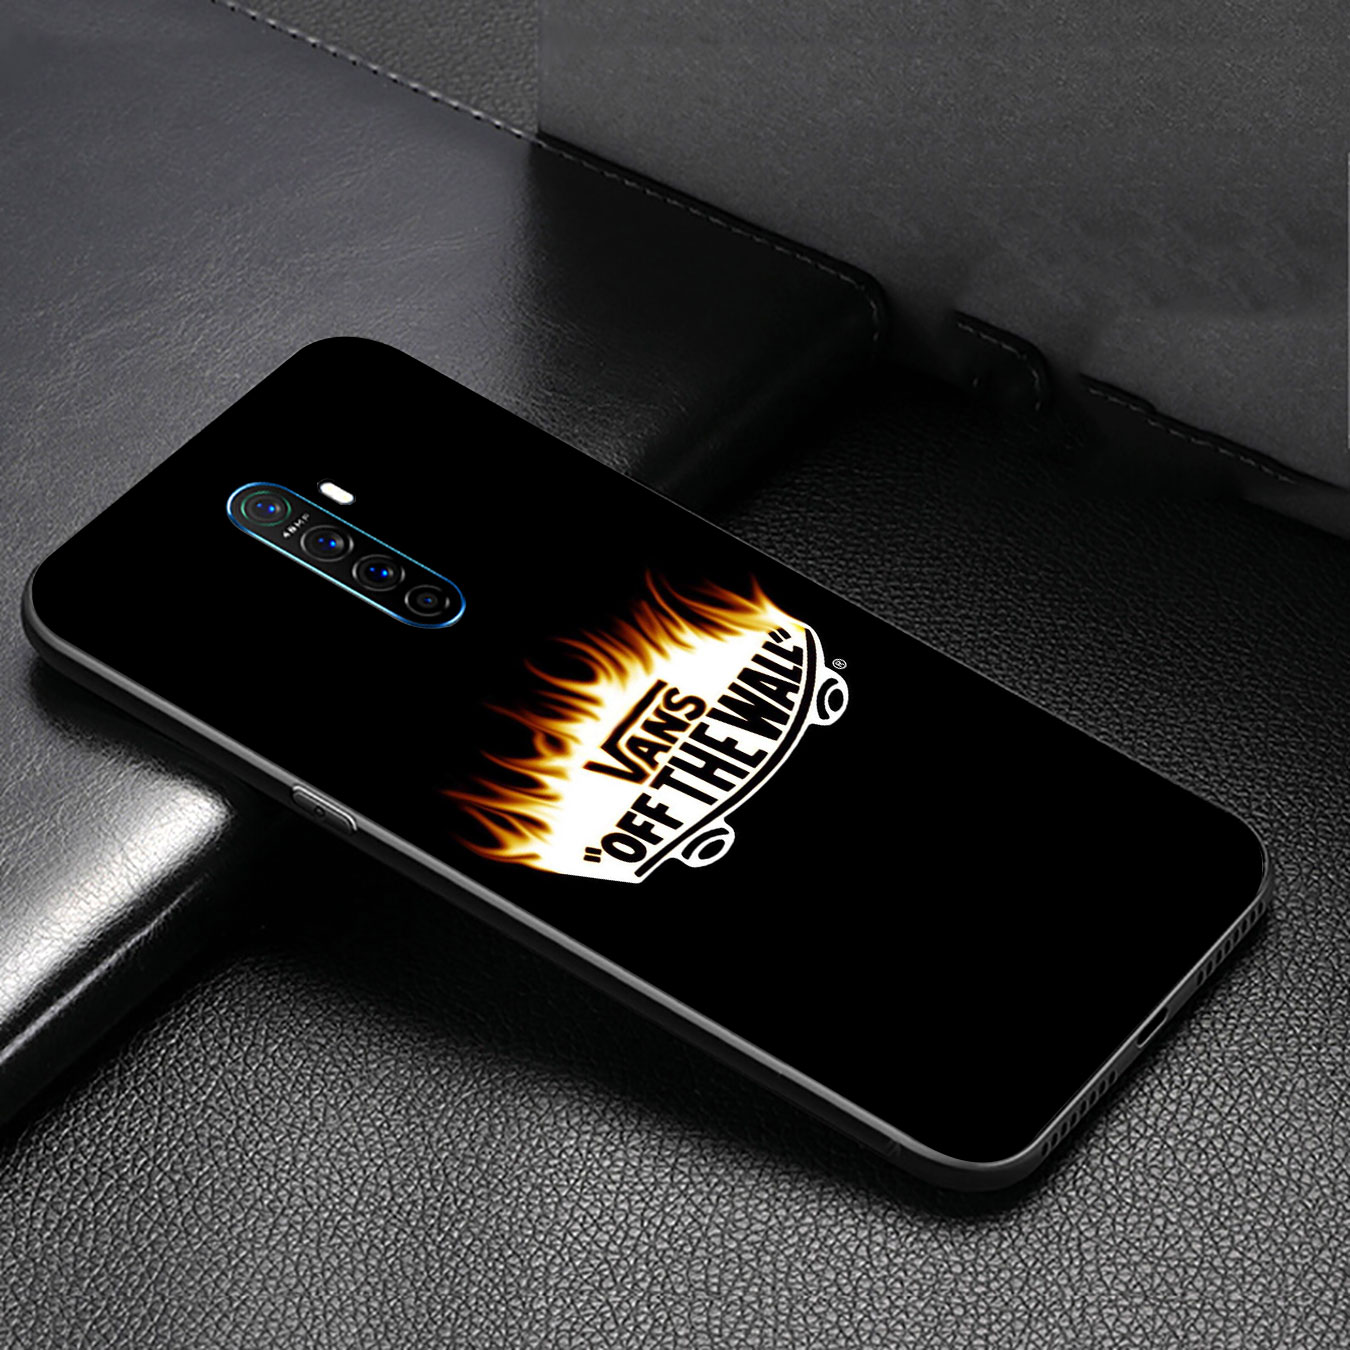 Ốp Điện Thoại Silicon Mềm In Logo Vans Màu Trắng Đen B133 Cho Xiaomi Redmi Note 8 Pro 8t 4x 4a 6a Note8 Pocophone F1